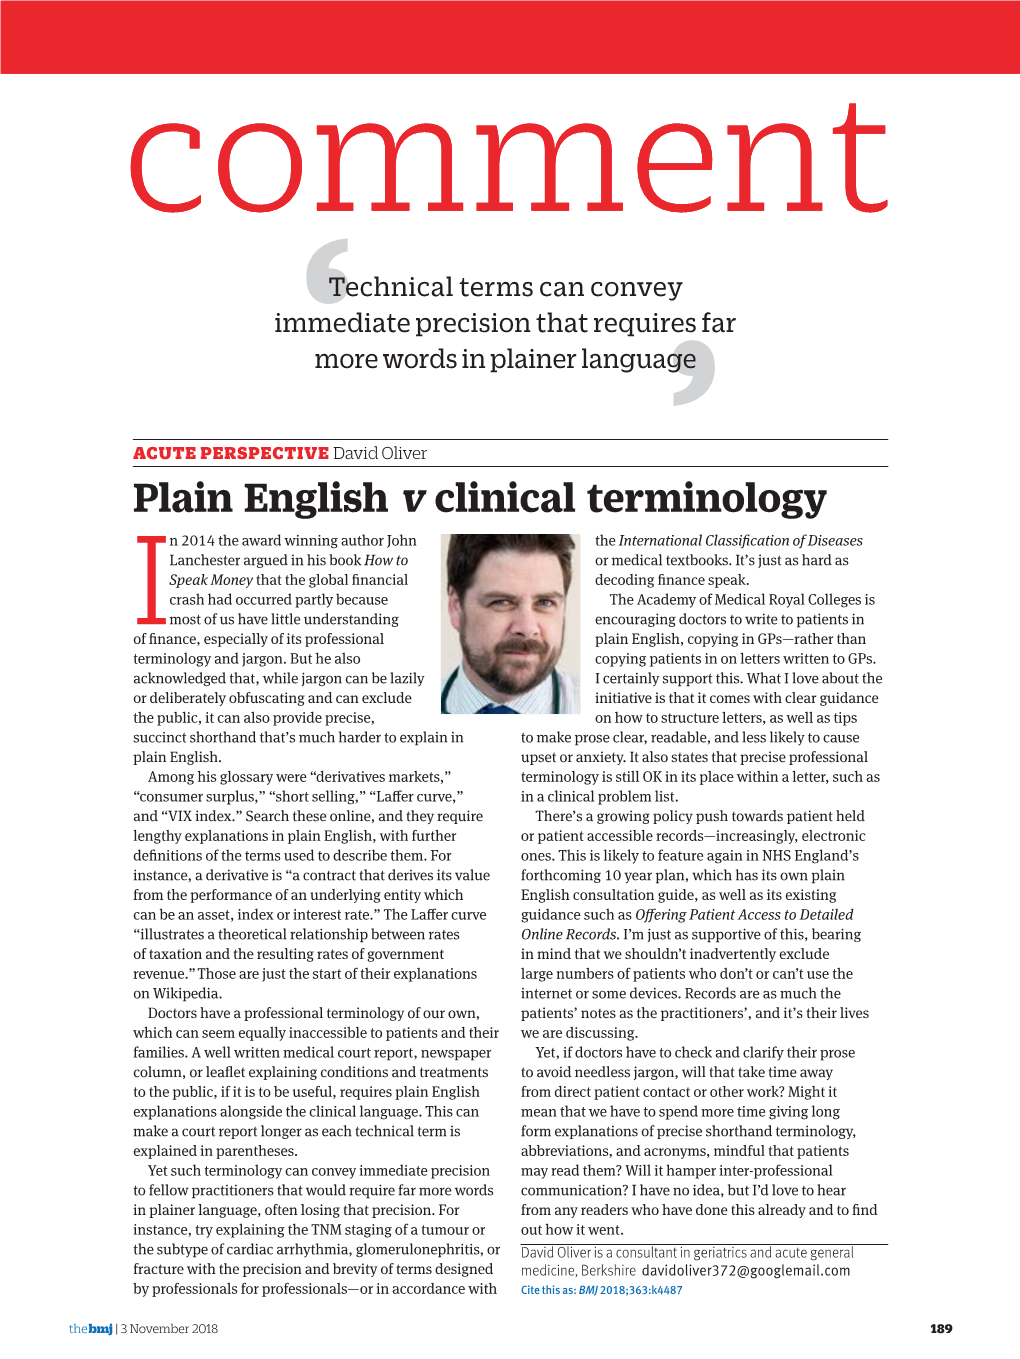 Plain English V Clinical Terminology